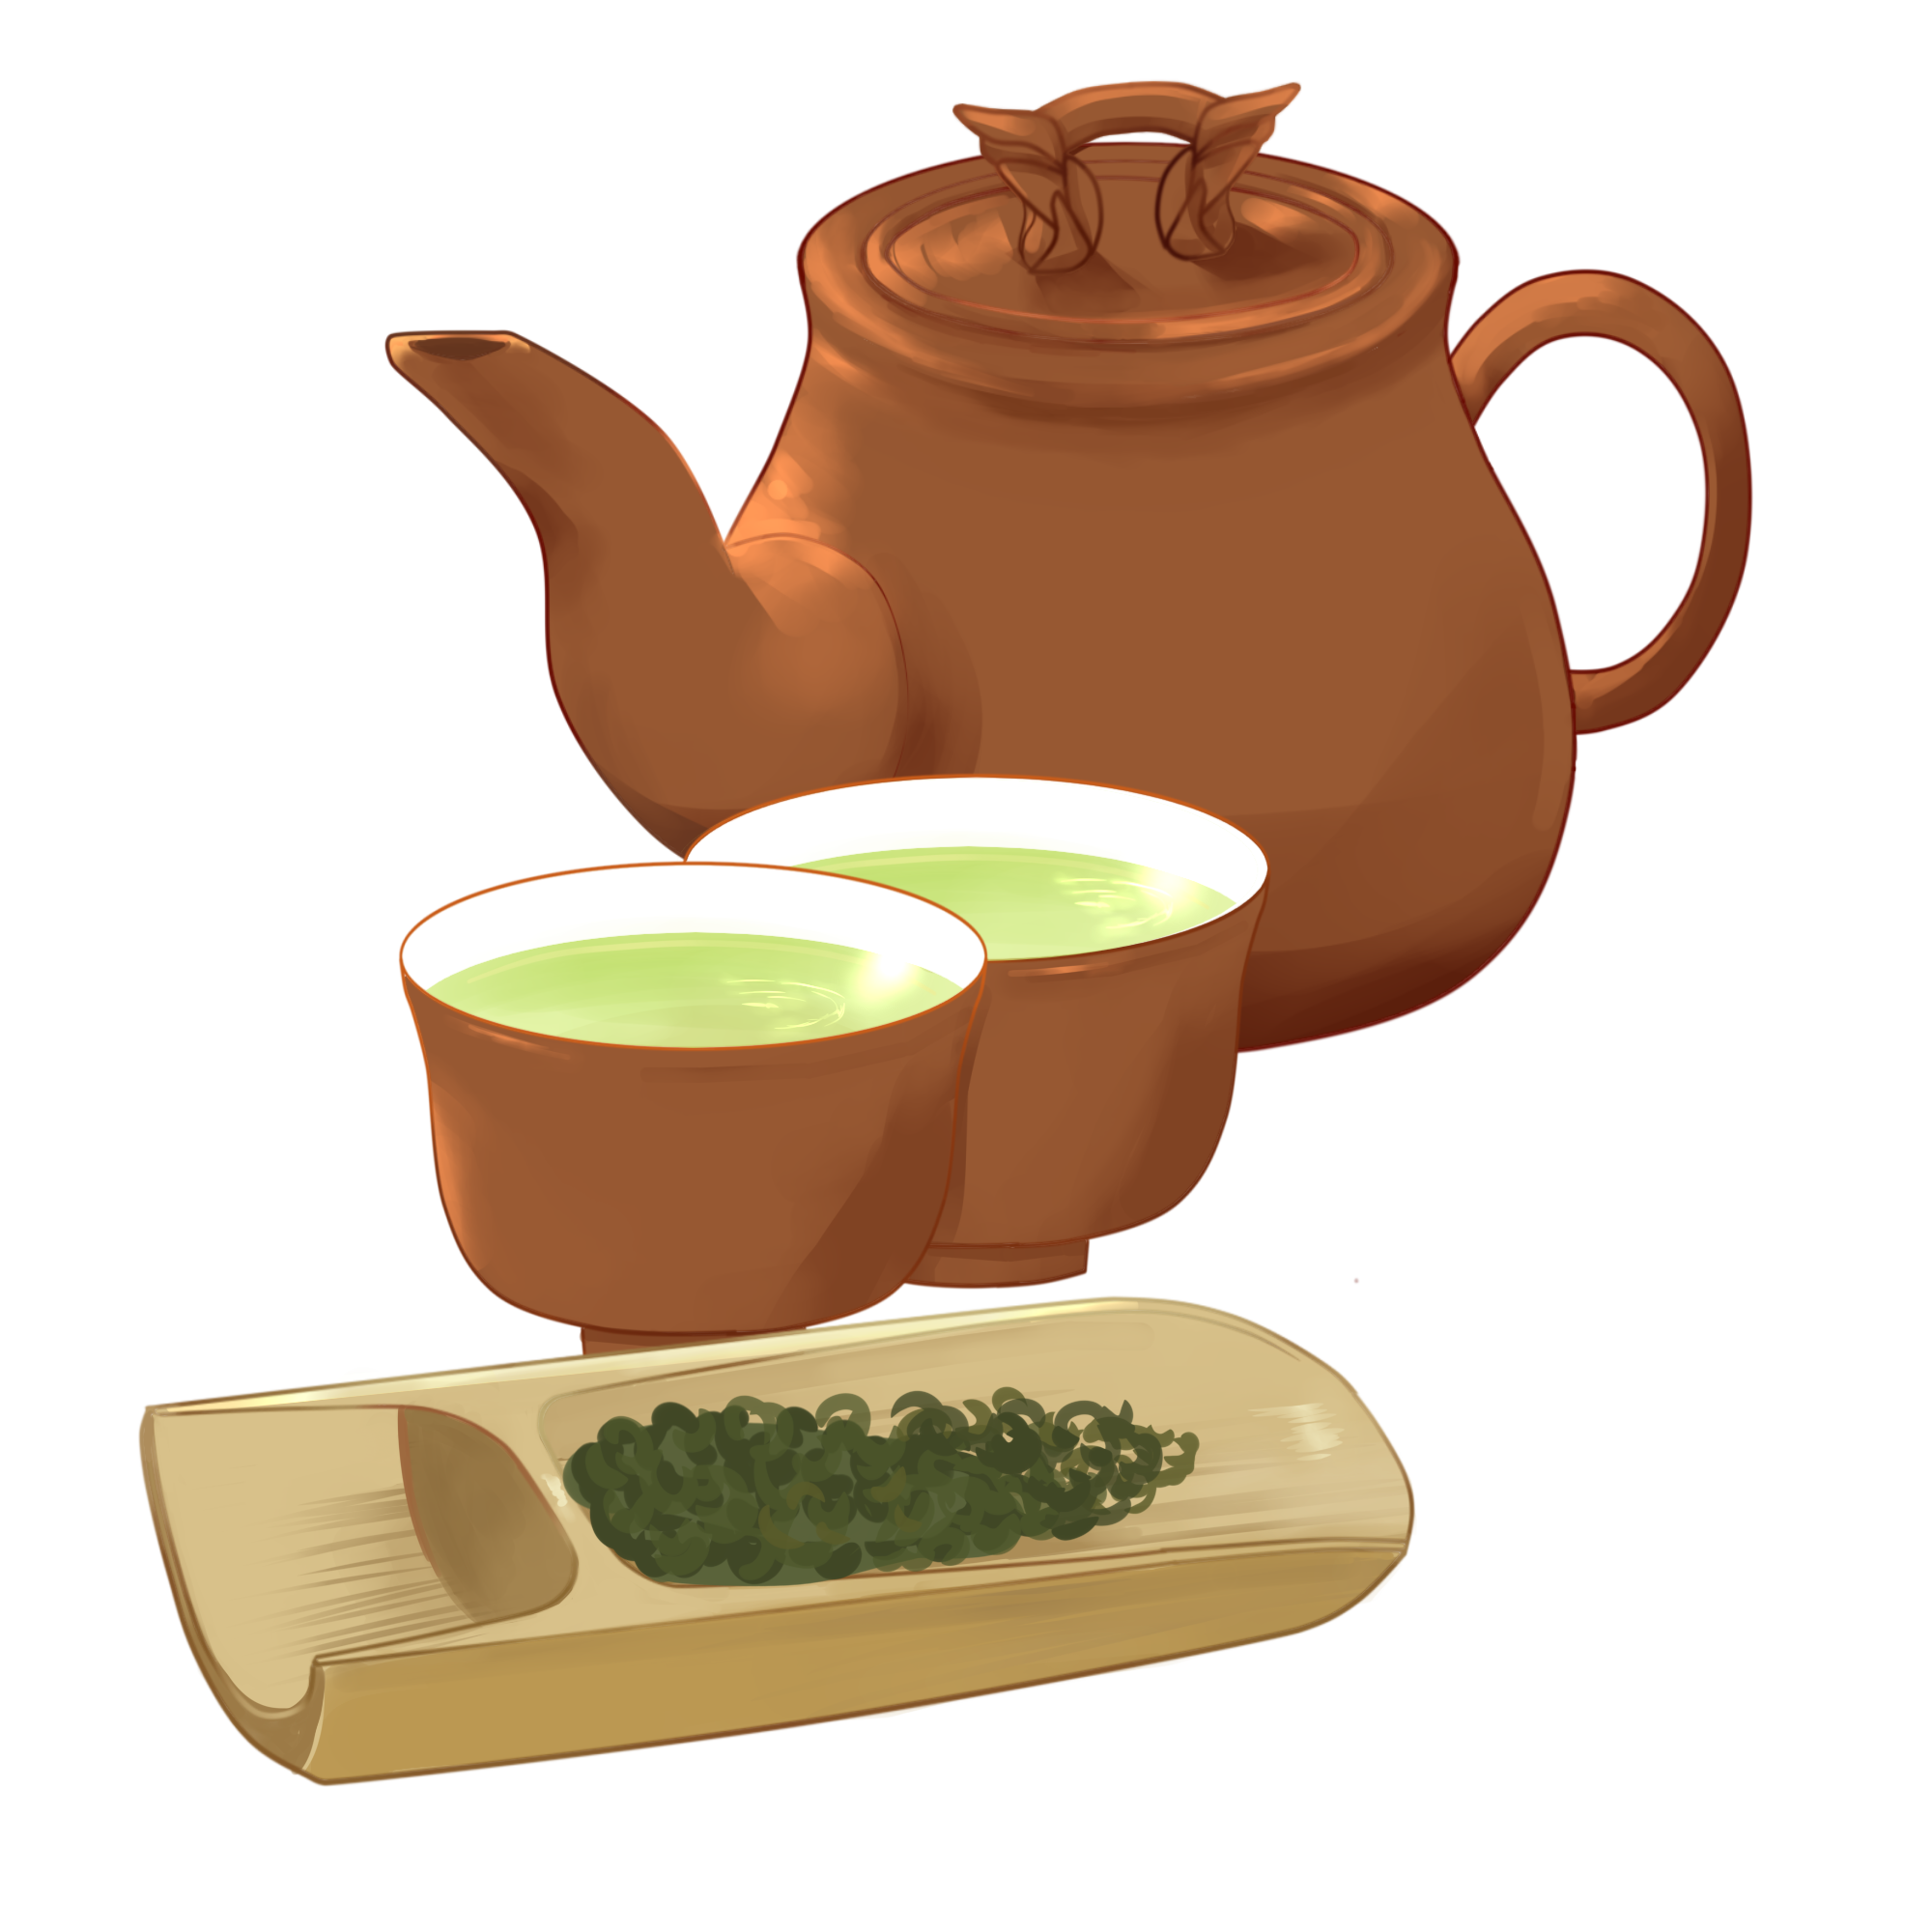 Pngtreeyellow teapot and teacup 4661707